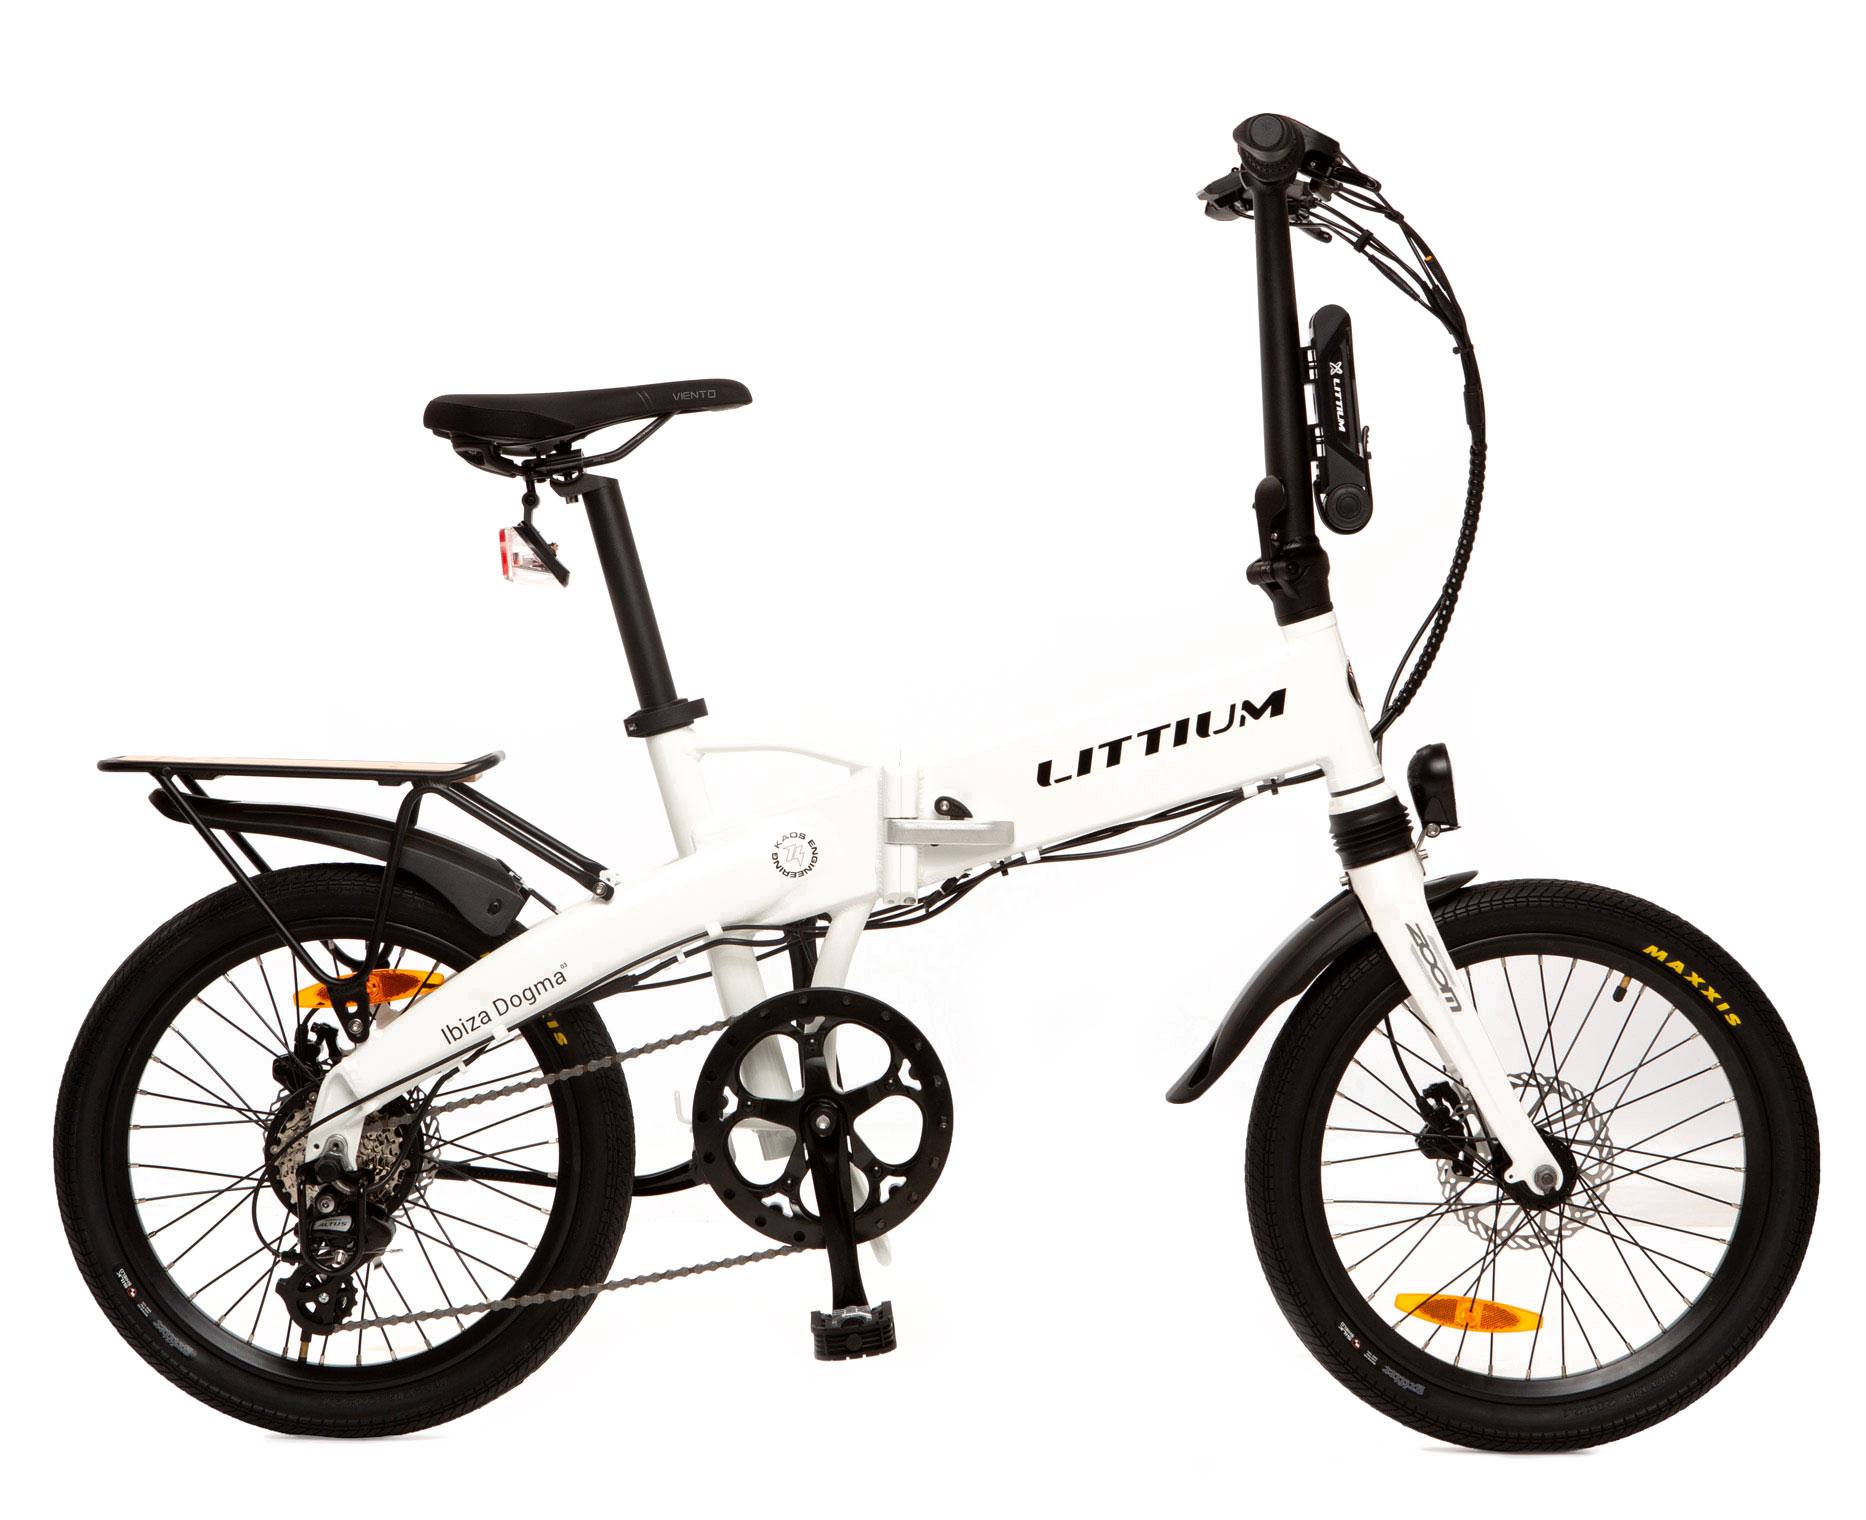 Littium Ibiza Dogma 03 bicicleta eléctrica plegable